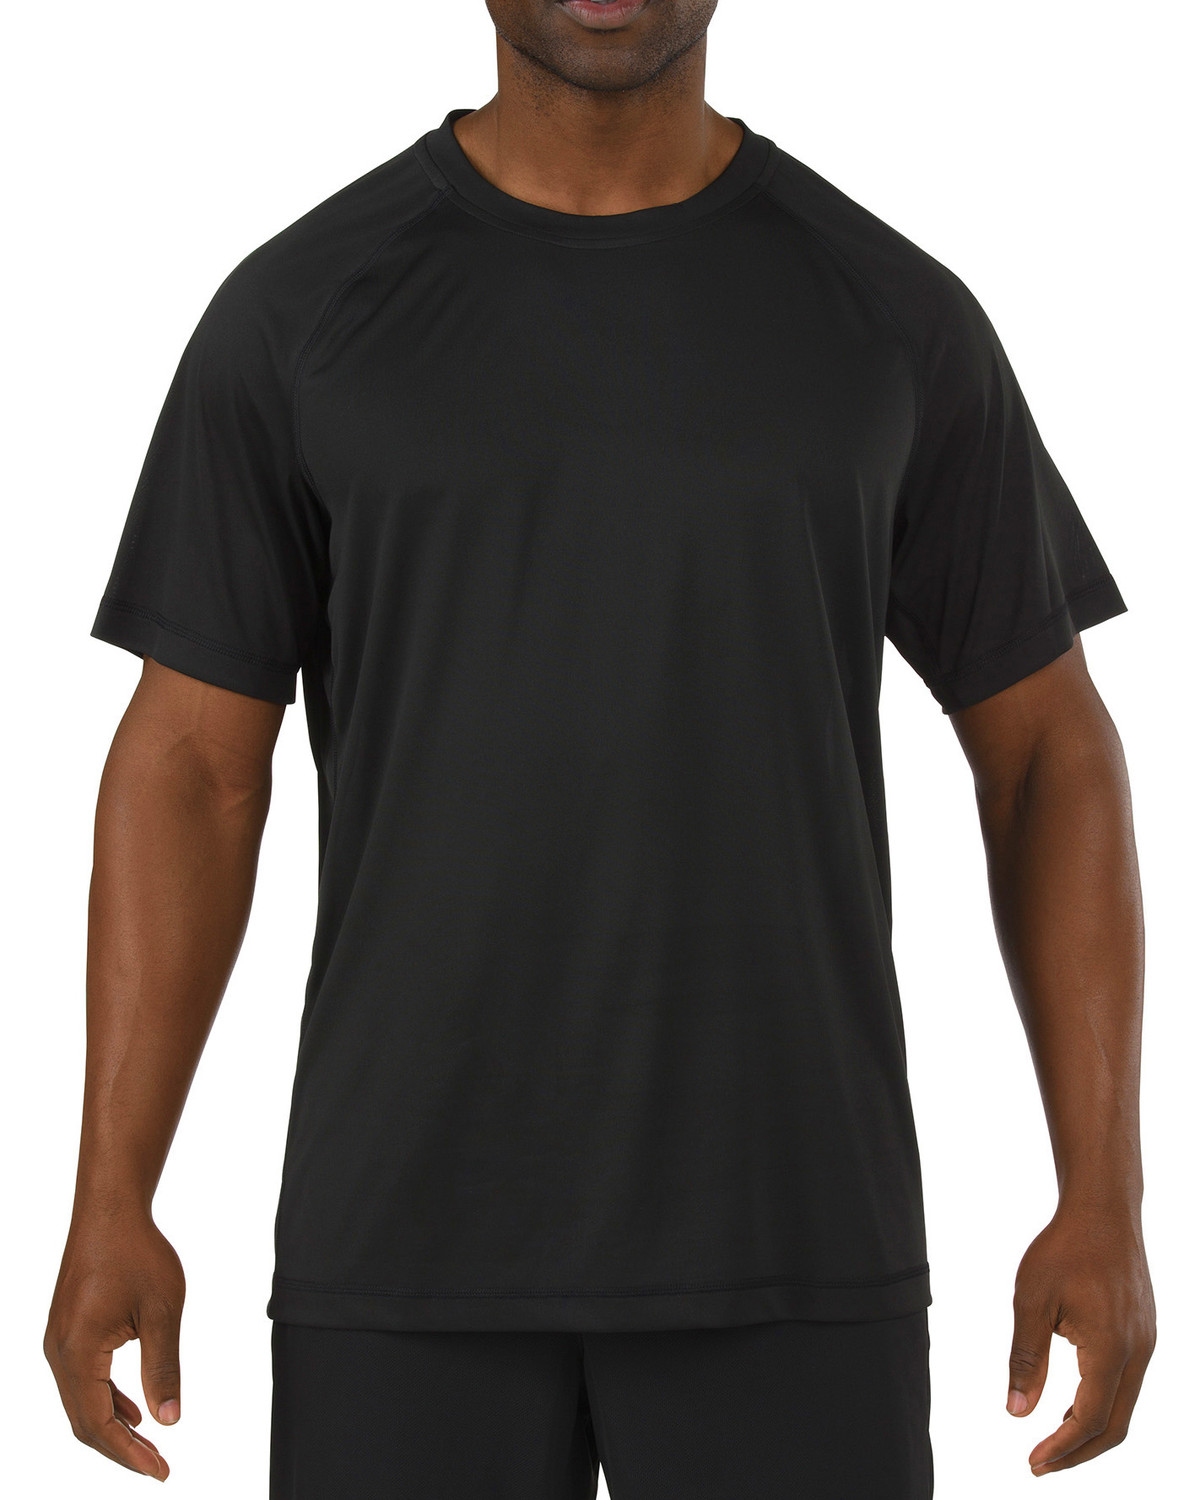 5.11 Tactical Men's Utility PT Short Sleeve Shirt